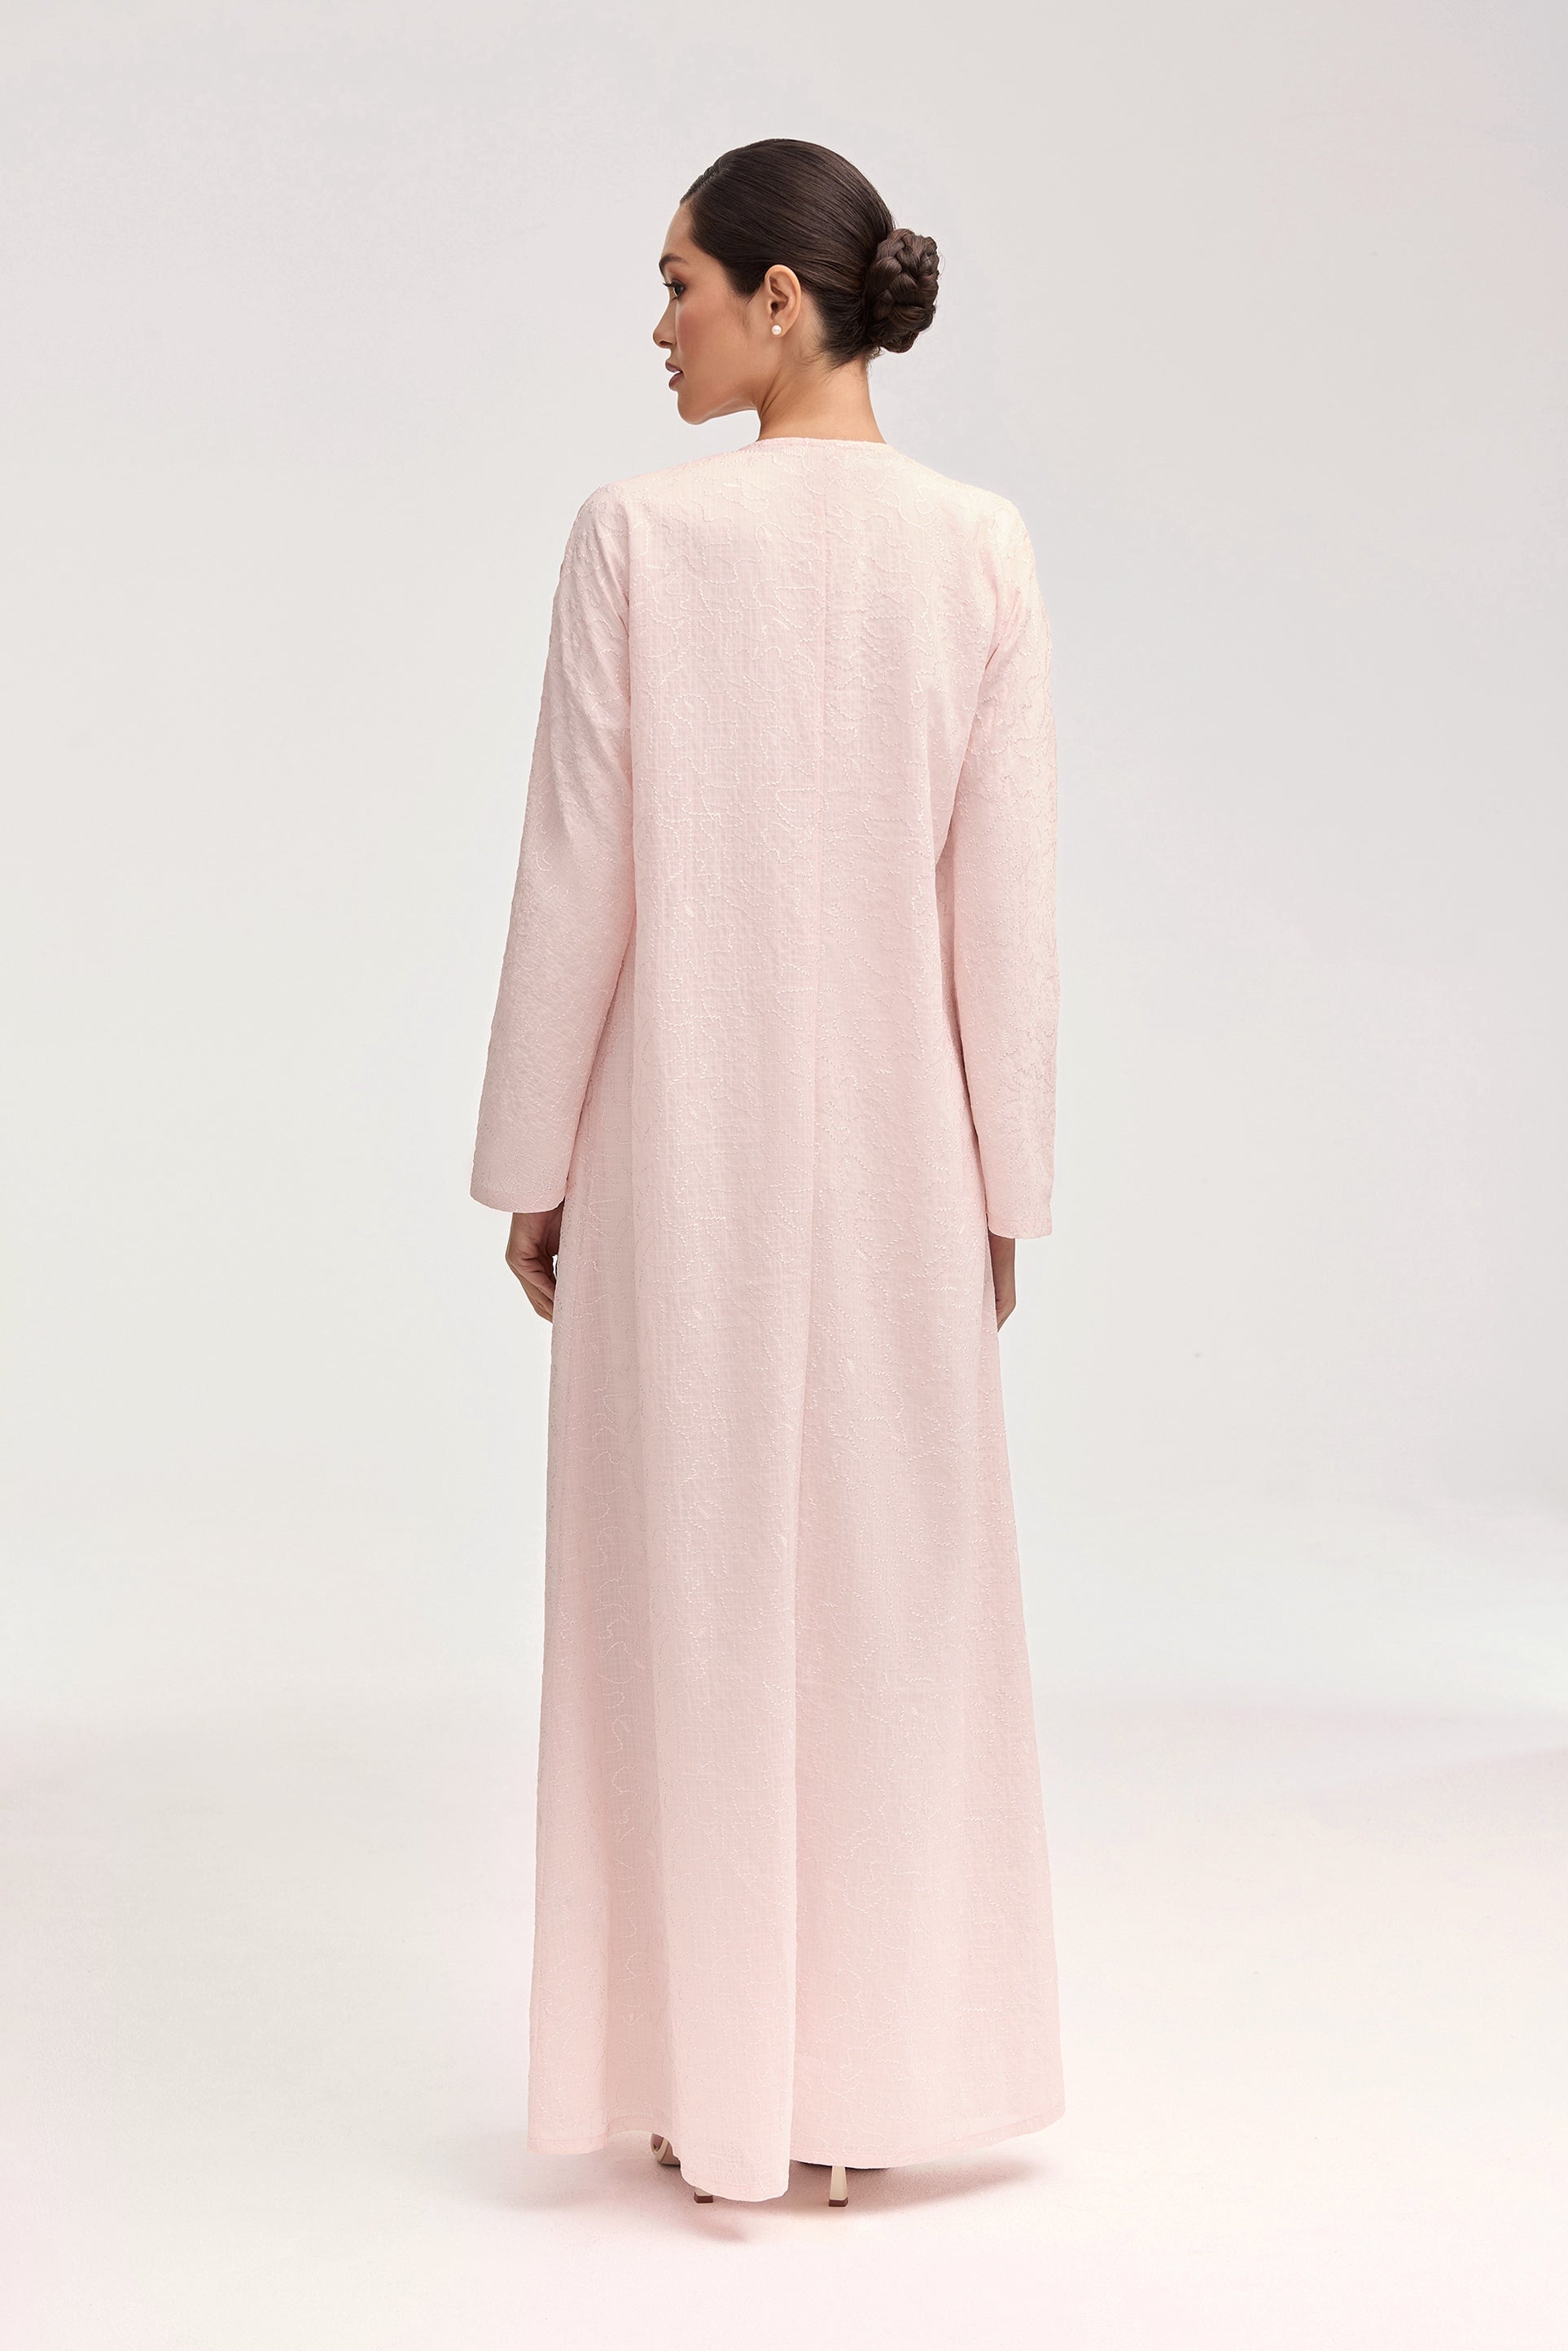 Malak Embroidered Open Abaya - Dusty Pink Clothing Veiled 